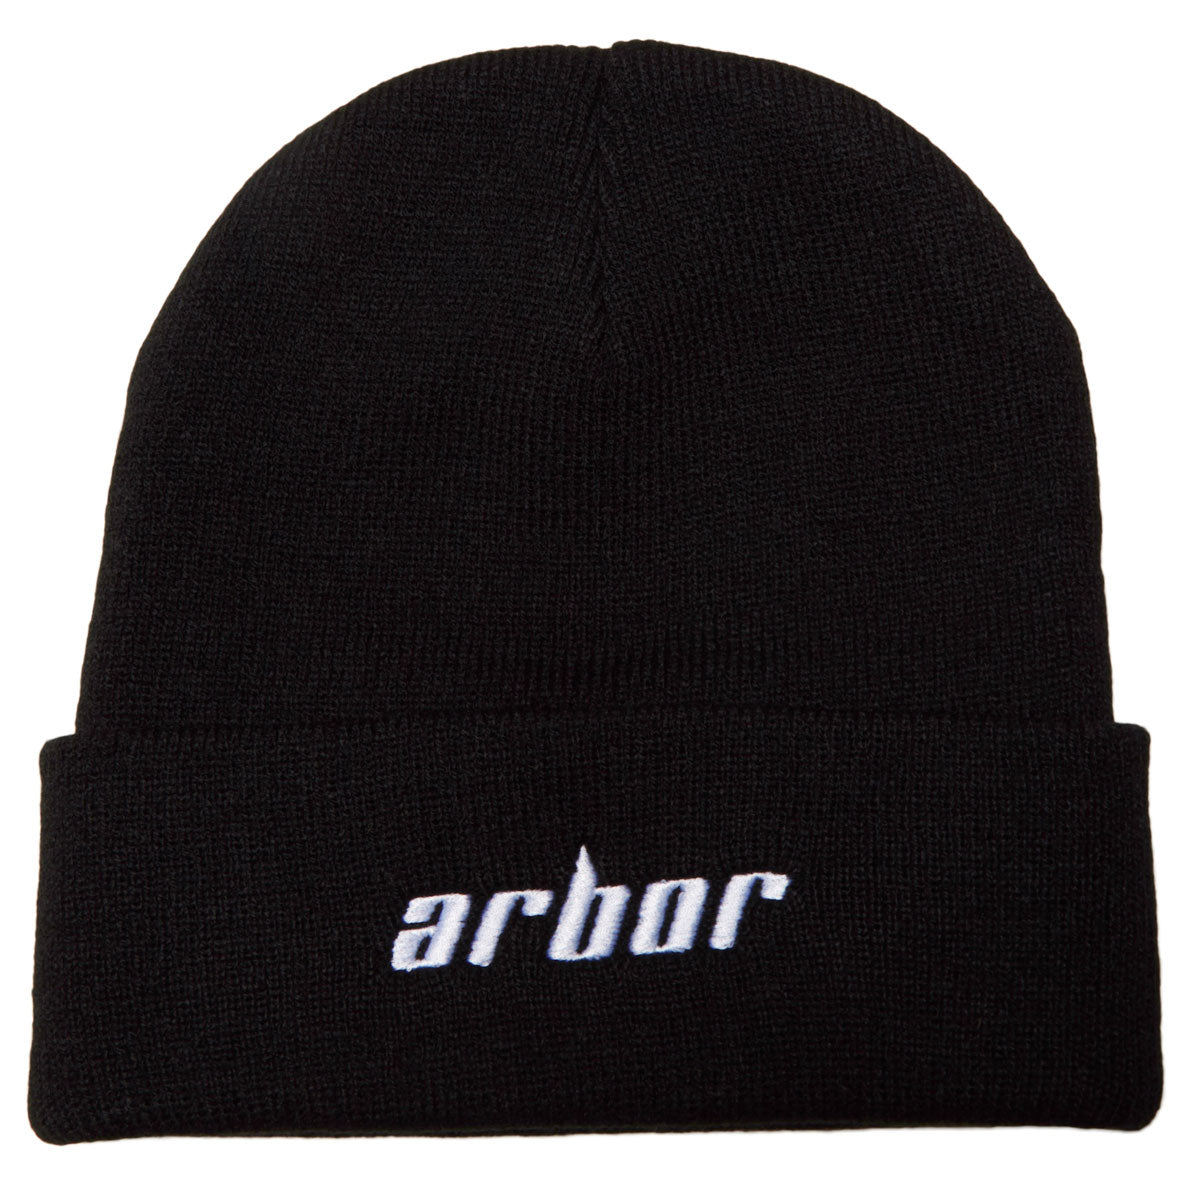 Arbor Draft Beanie - Black image 1